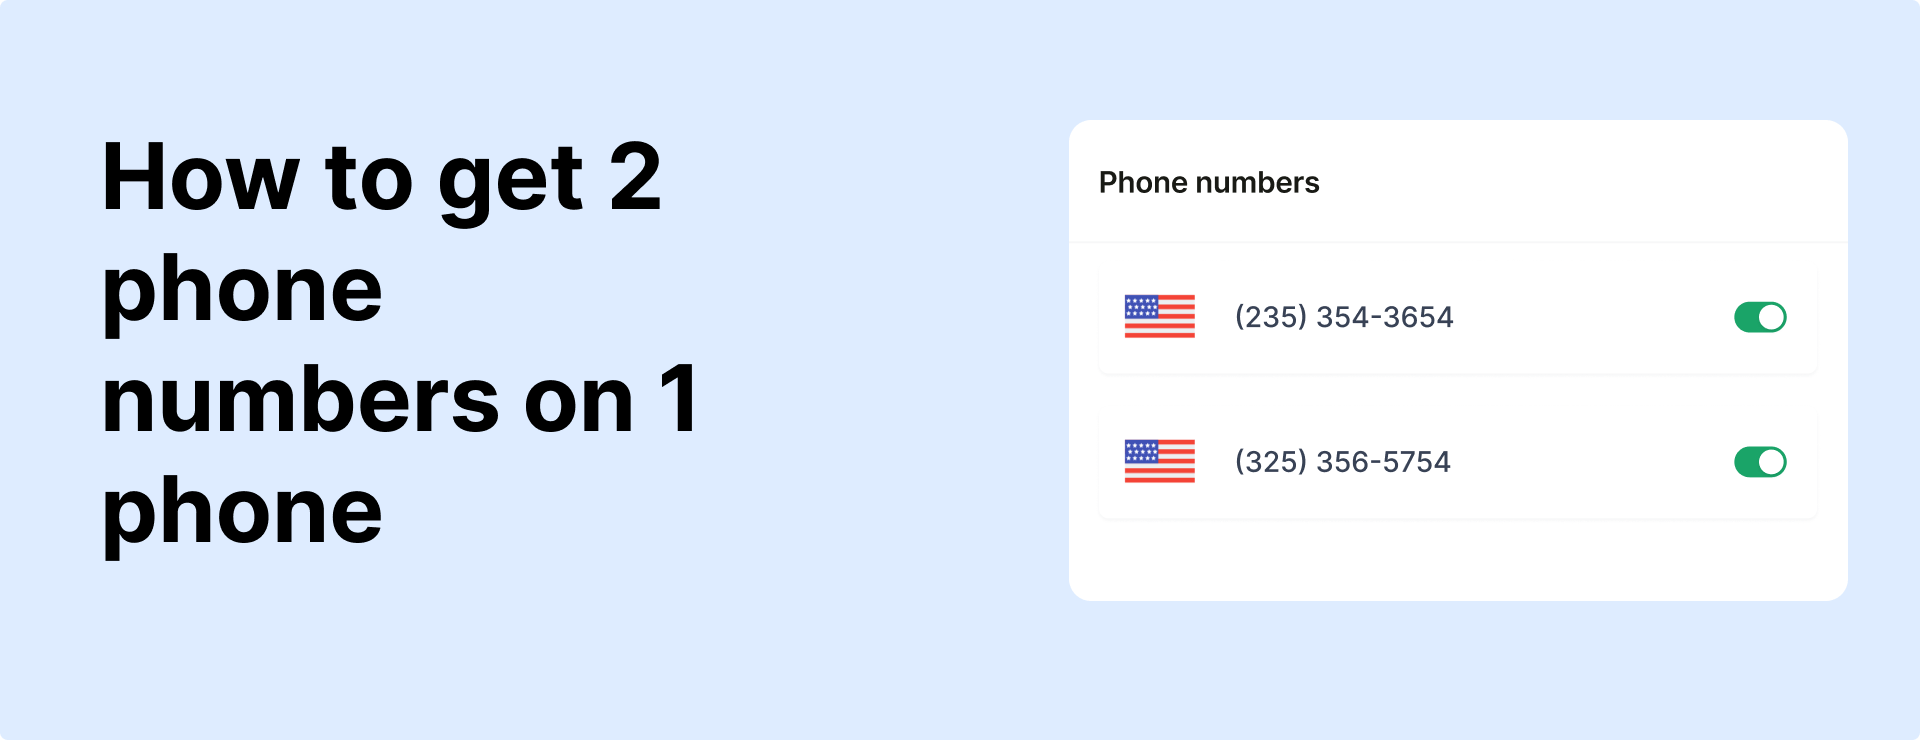 2 phone numbers on 1 phone